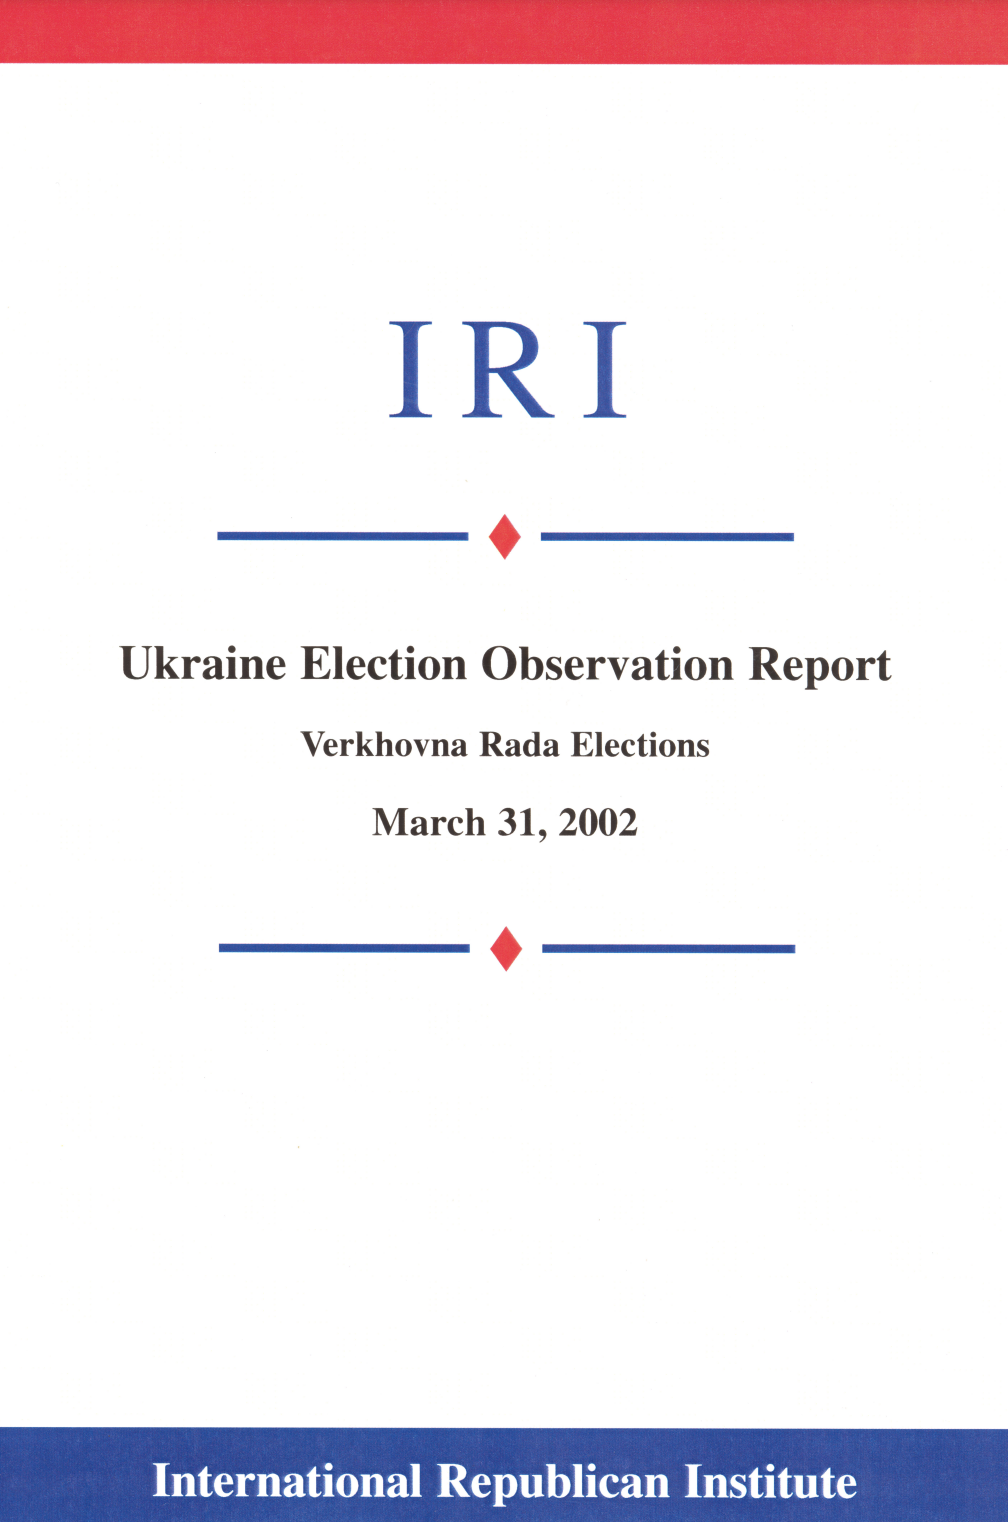 Ukraine Election Observation Report: Verkhovna Rada Elections (March 31, 2002)